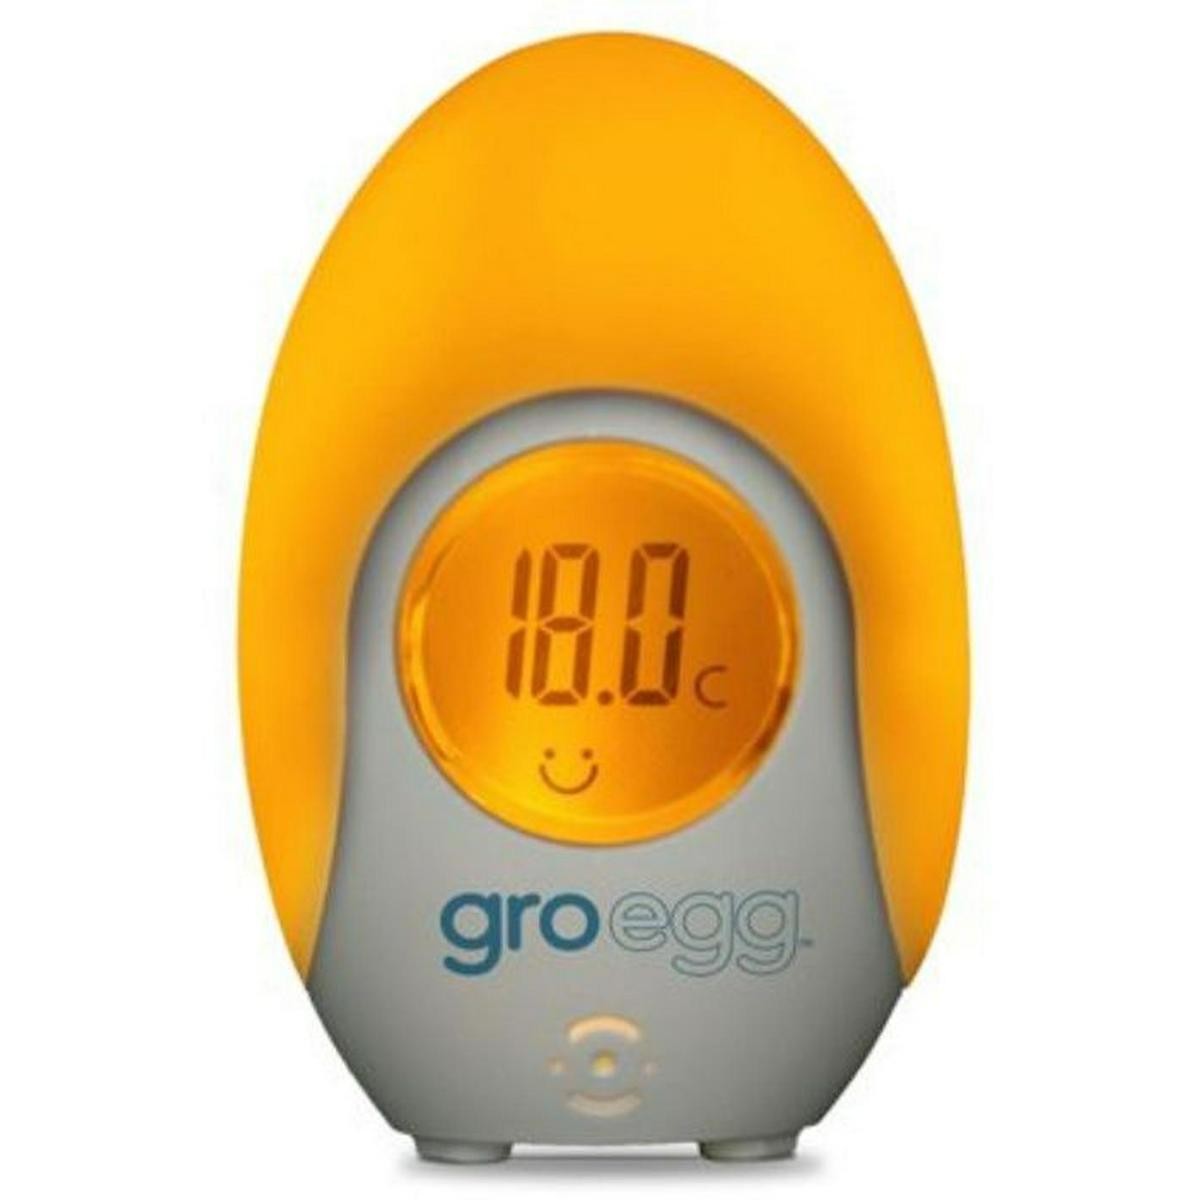 Gro egg digital room thermometer